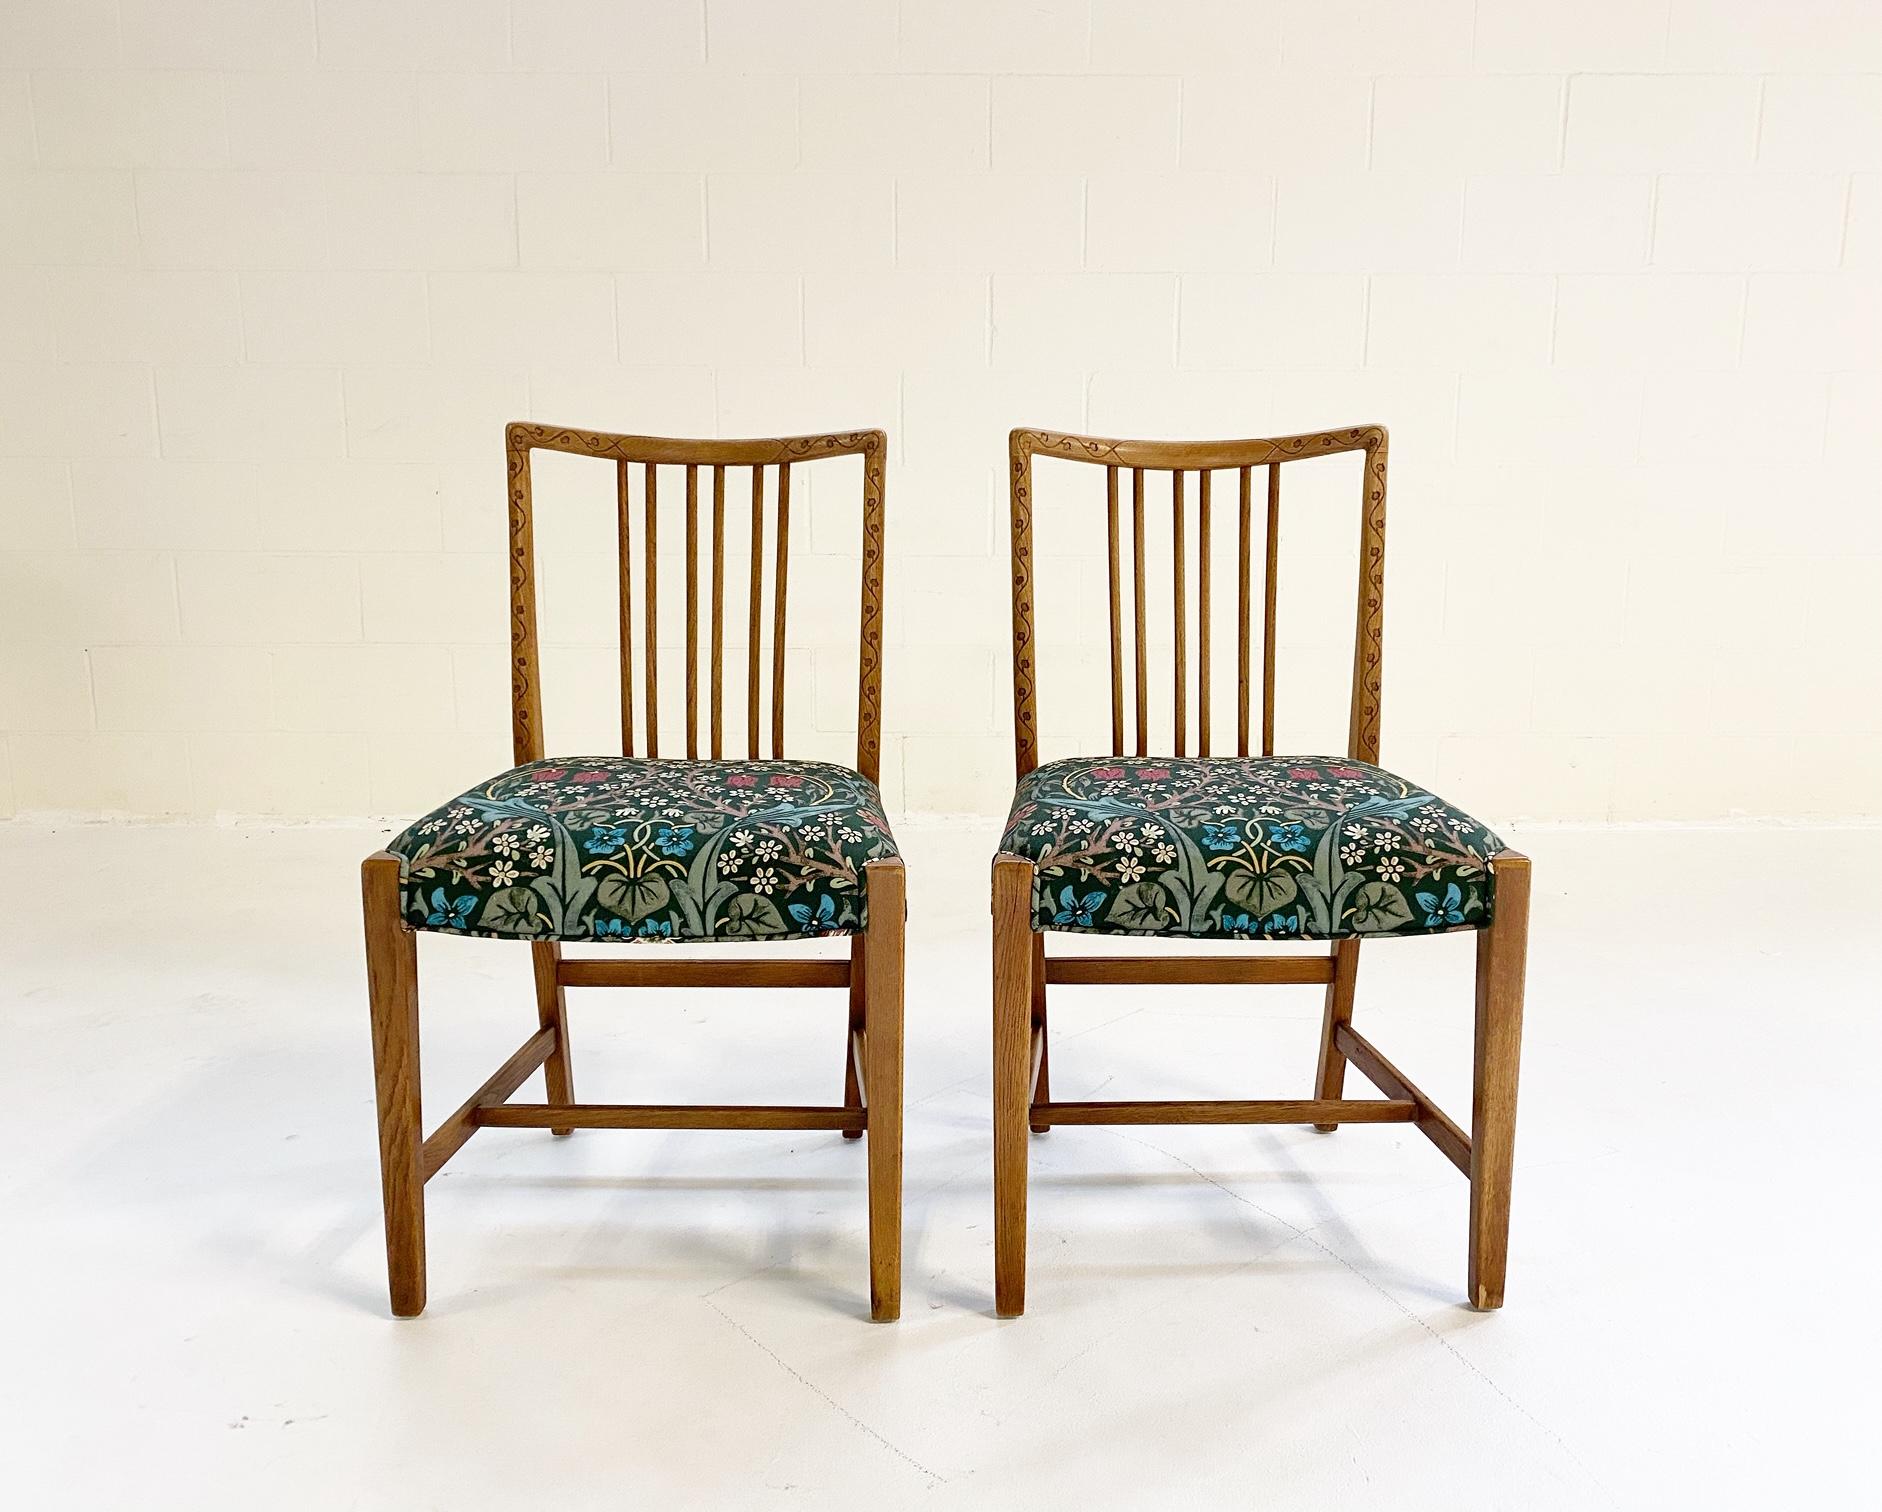 Danish Hans Wegner Dining Chairs in William Morris Blackthorn, Pair For Sale